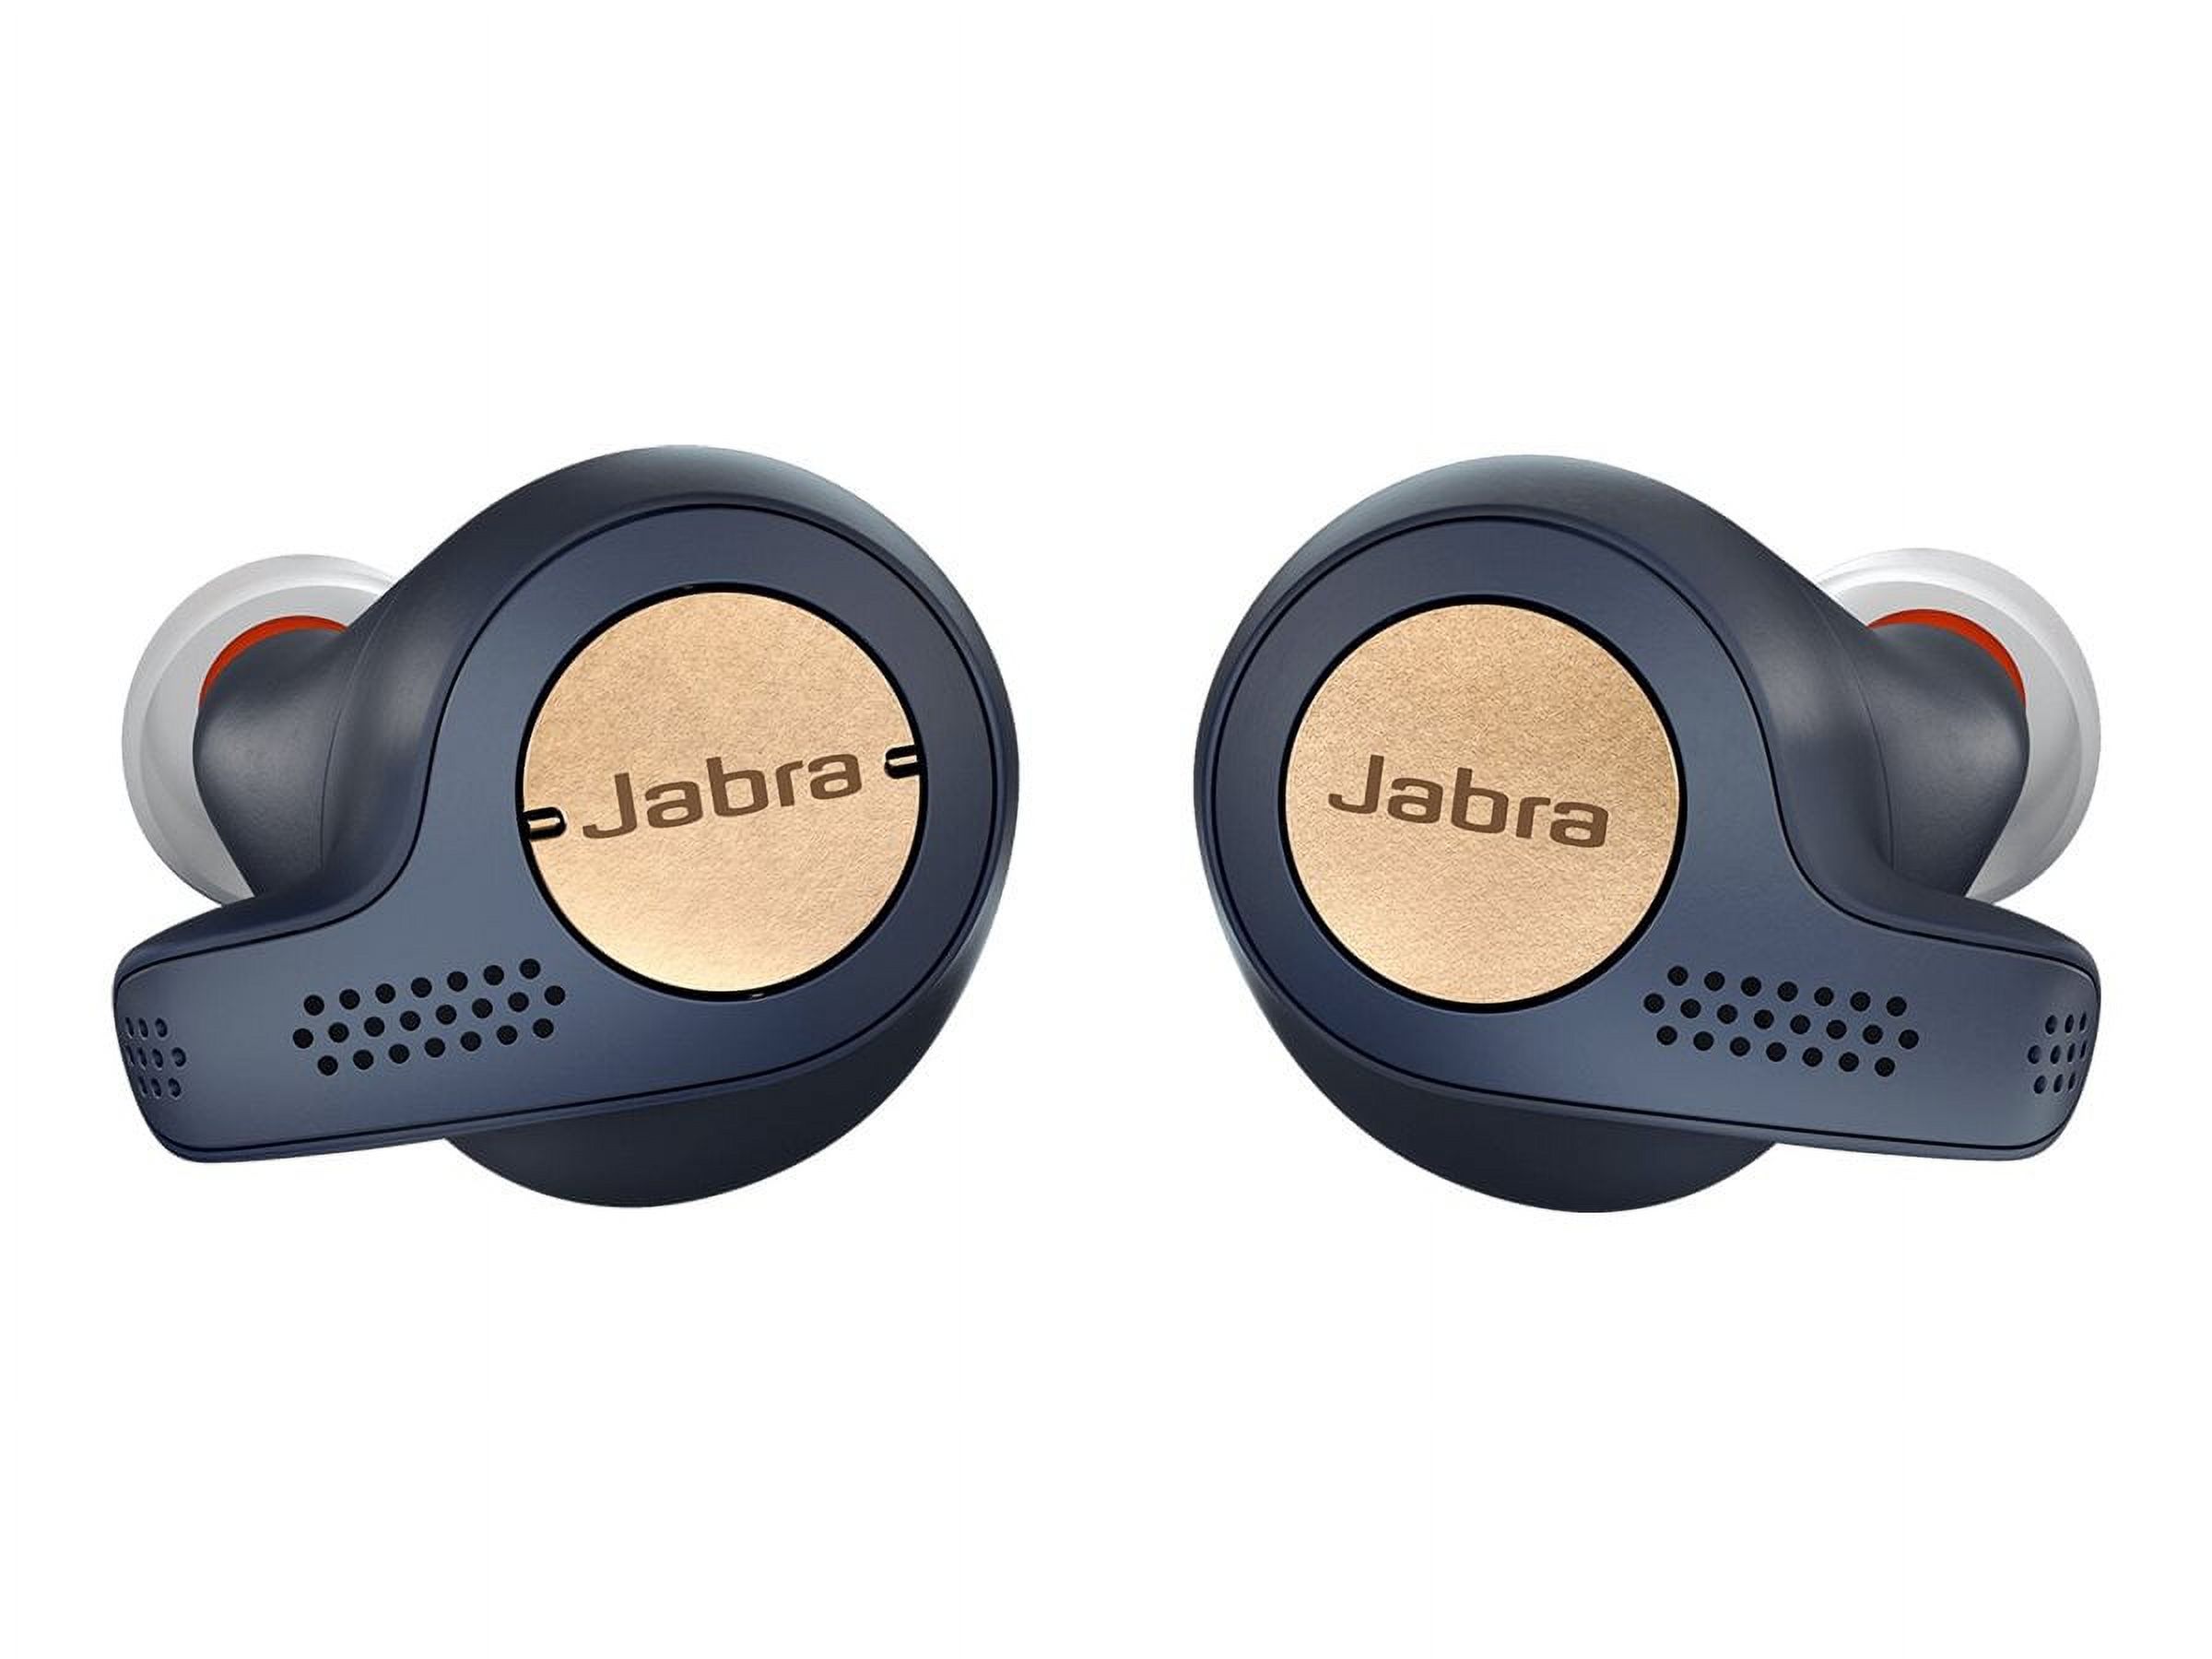 Jabra True Wireless Headphones with Charging Case, Copper Blue, 100-99010000-02 - image 5 of 7